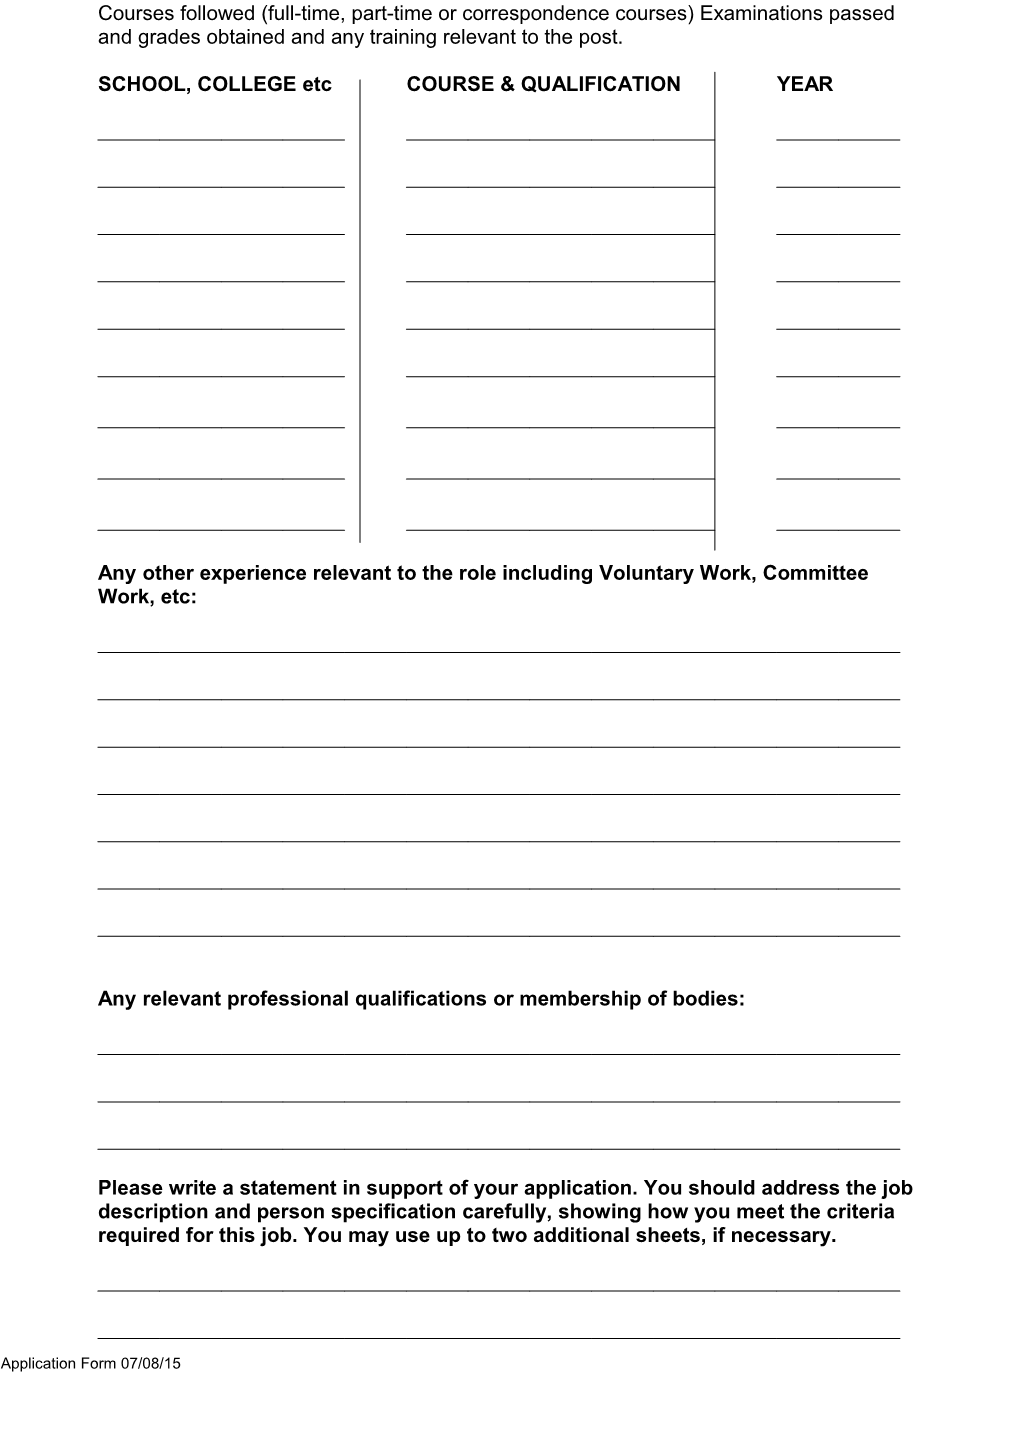 Application Form 07/08/15